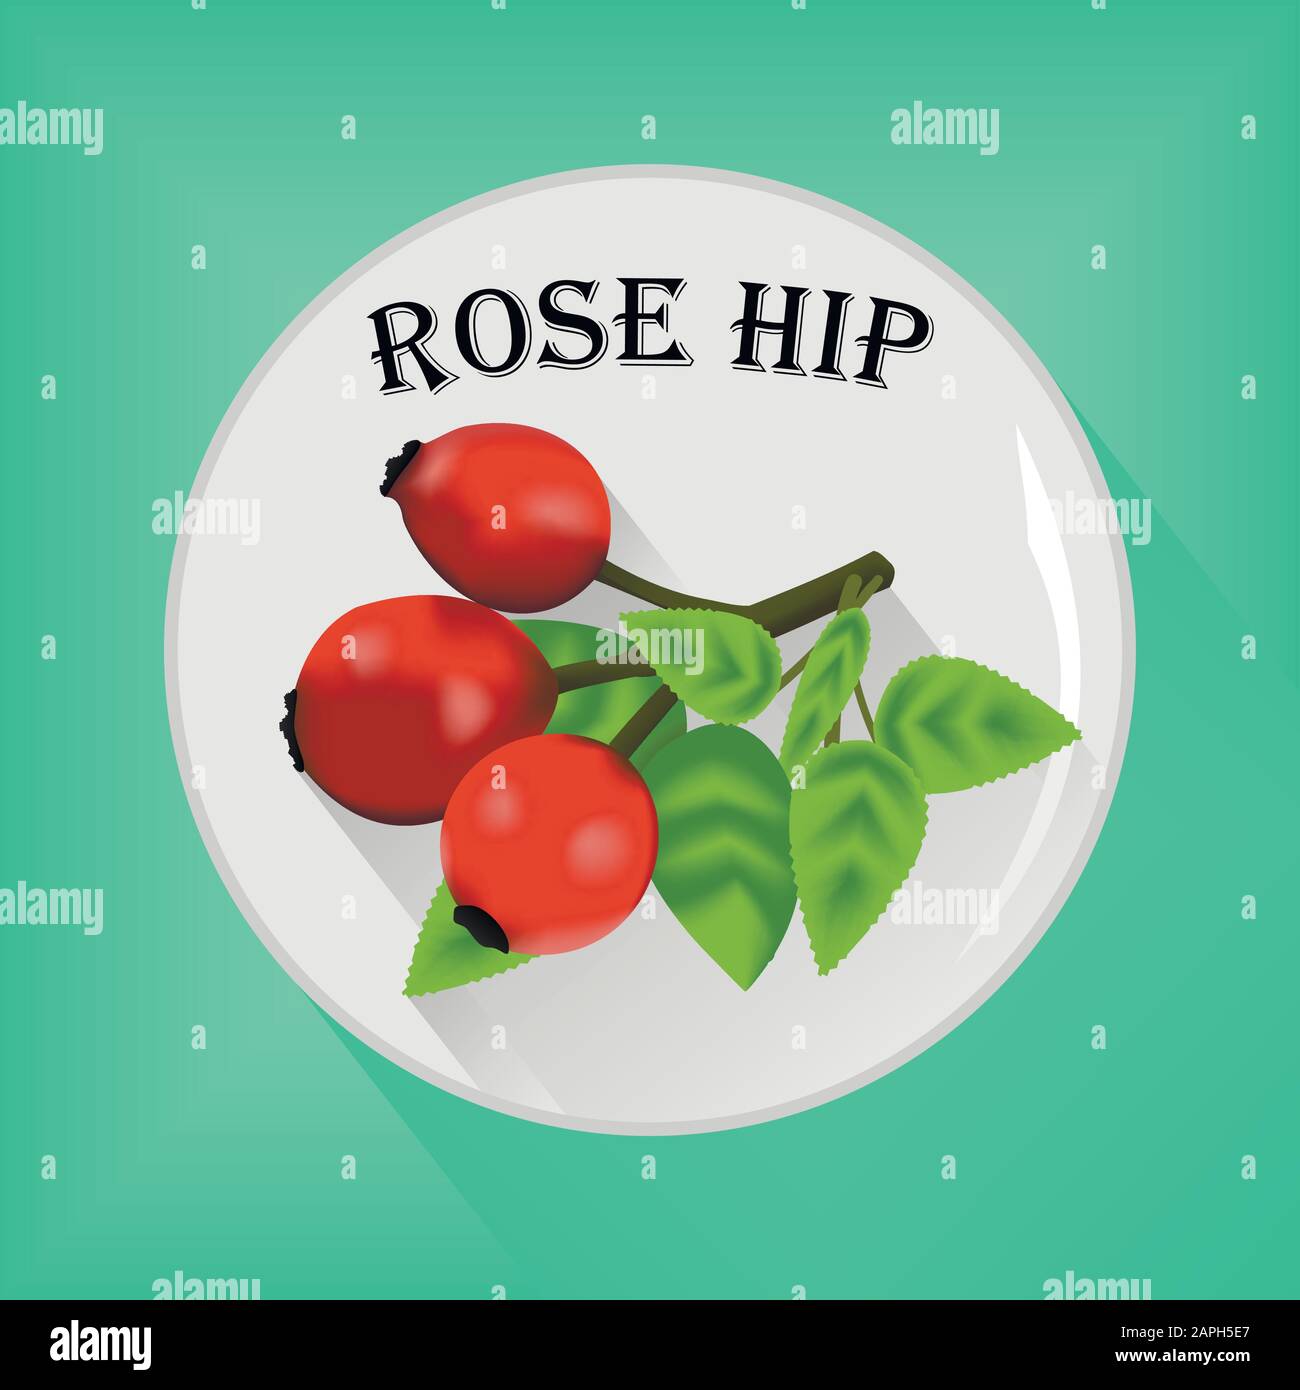 Rose hip seasoning sticker flat icon vector image Stock Vector